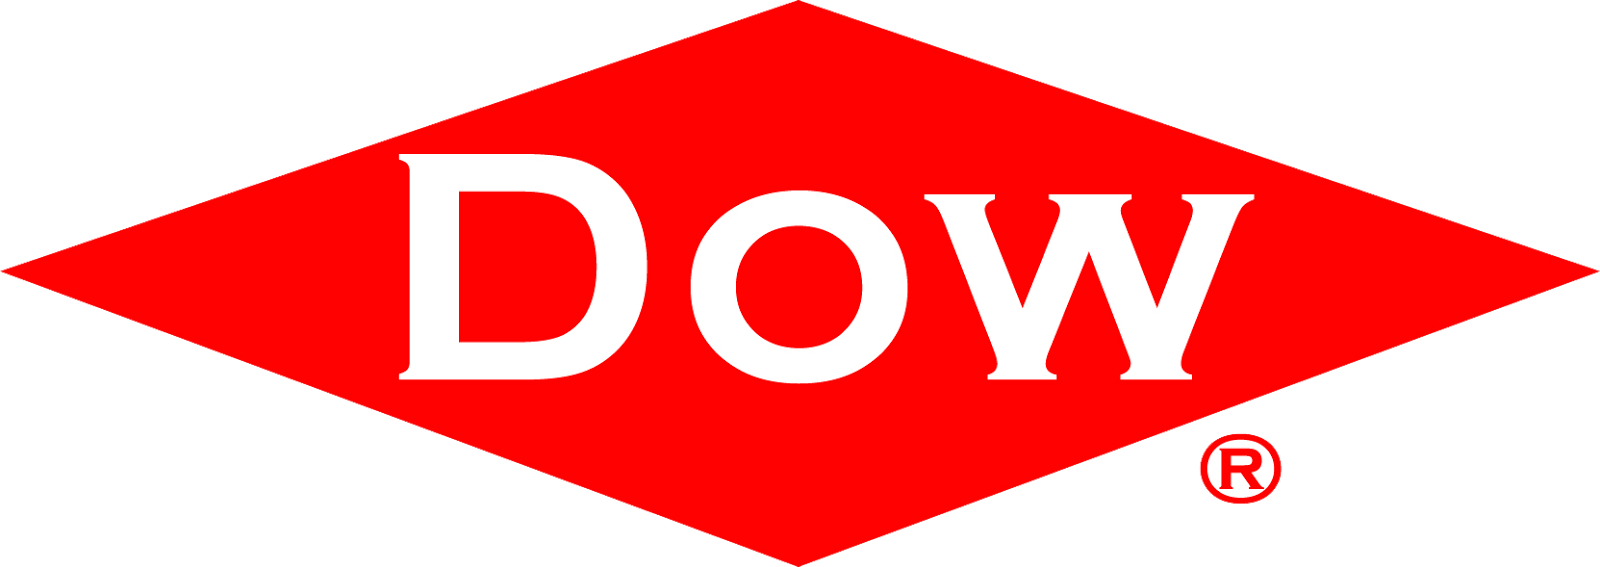 Dow registered trademark logo.